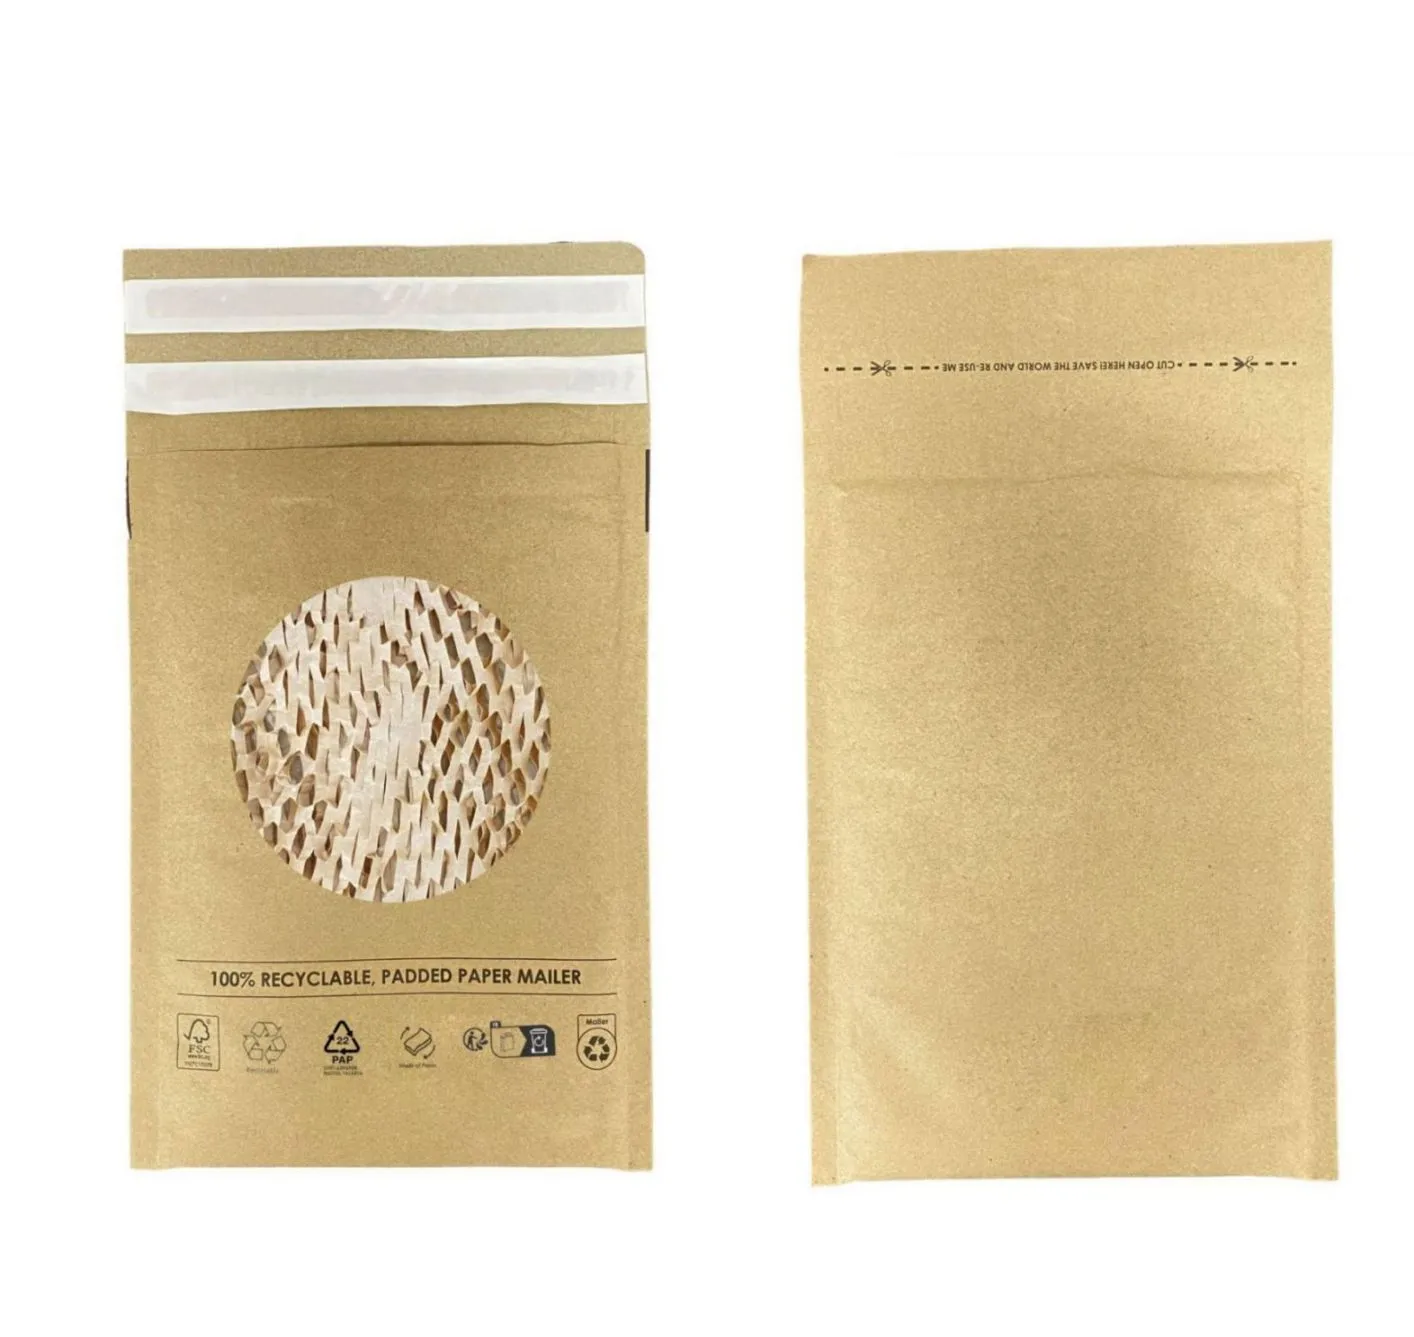 Honeycomb paper mailing bag